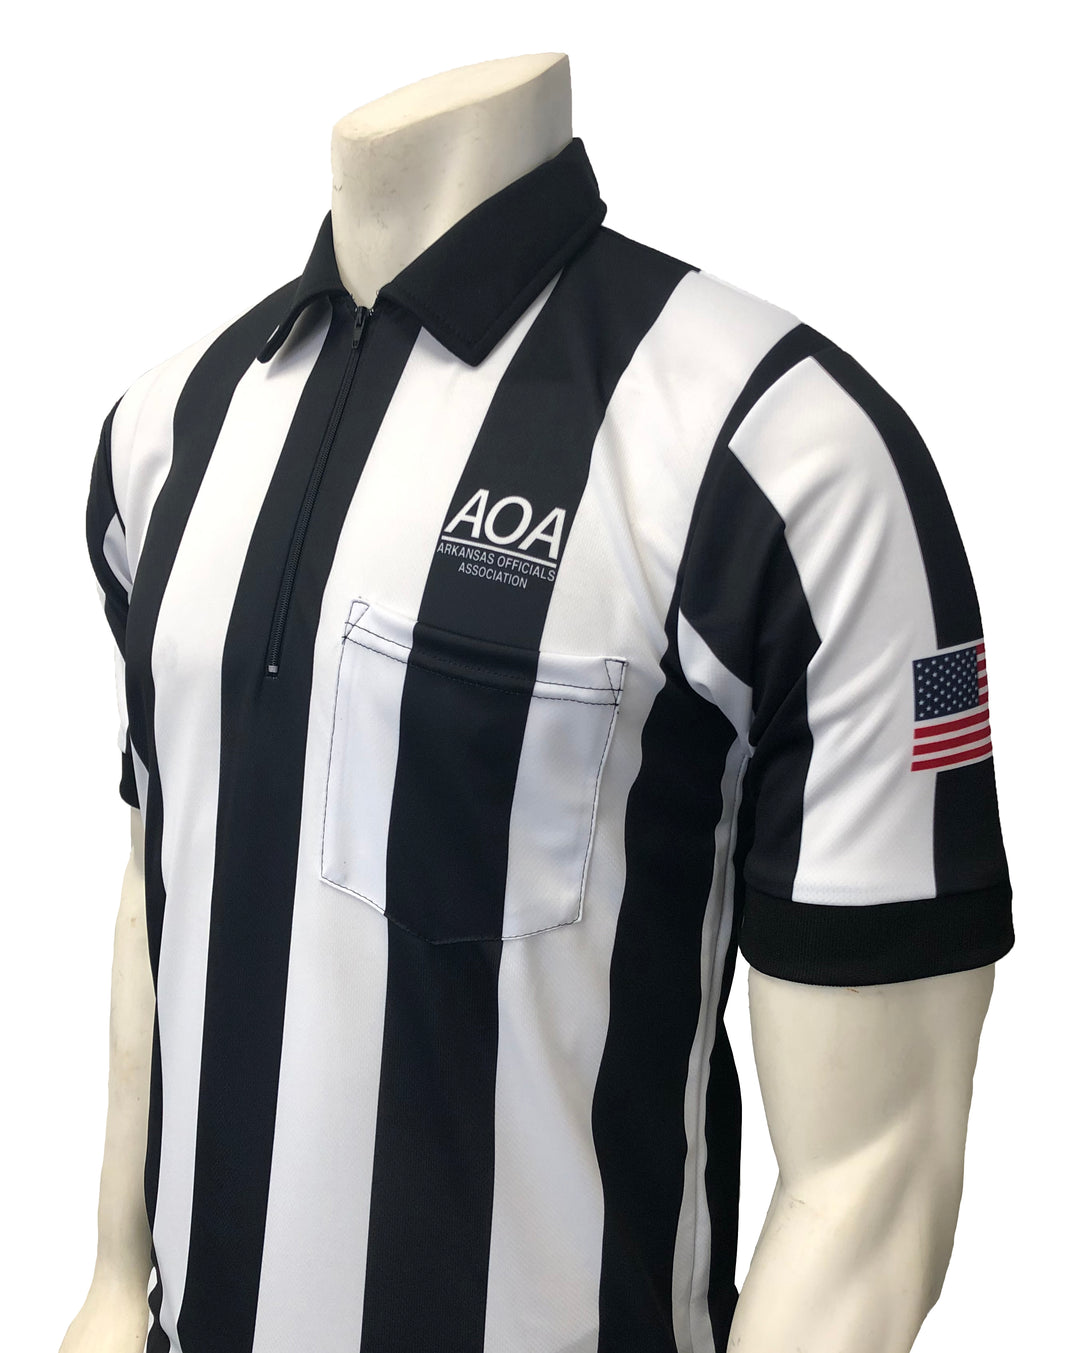 USA130AR - Smitty "Made in USA" - "AOA" Short Sleeve Football Shirt